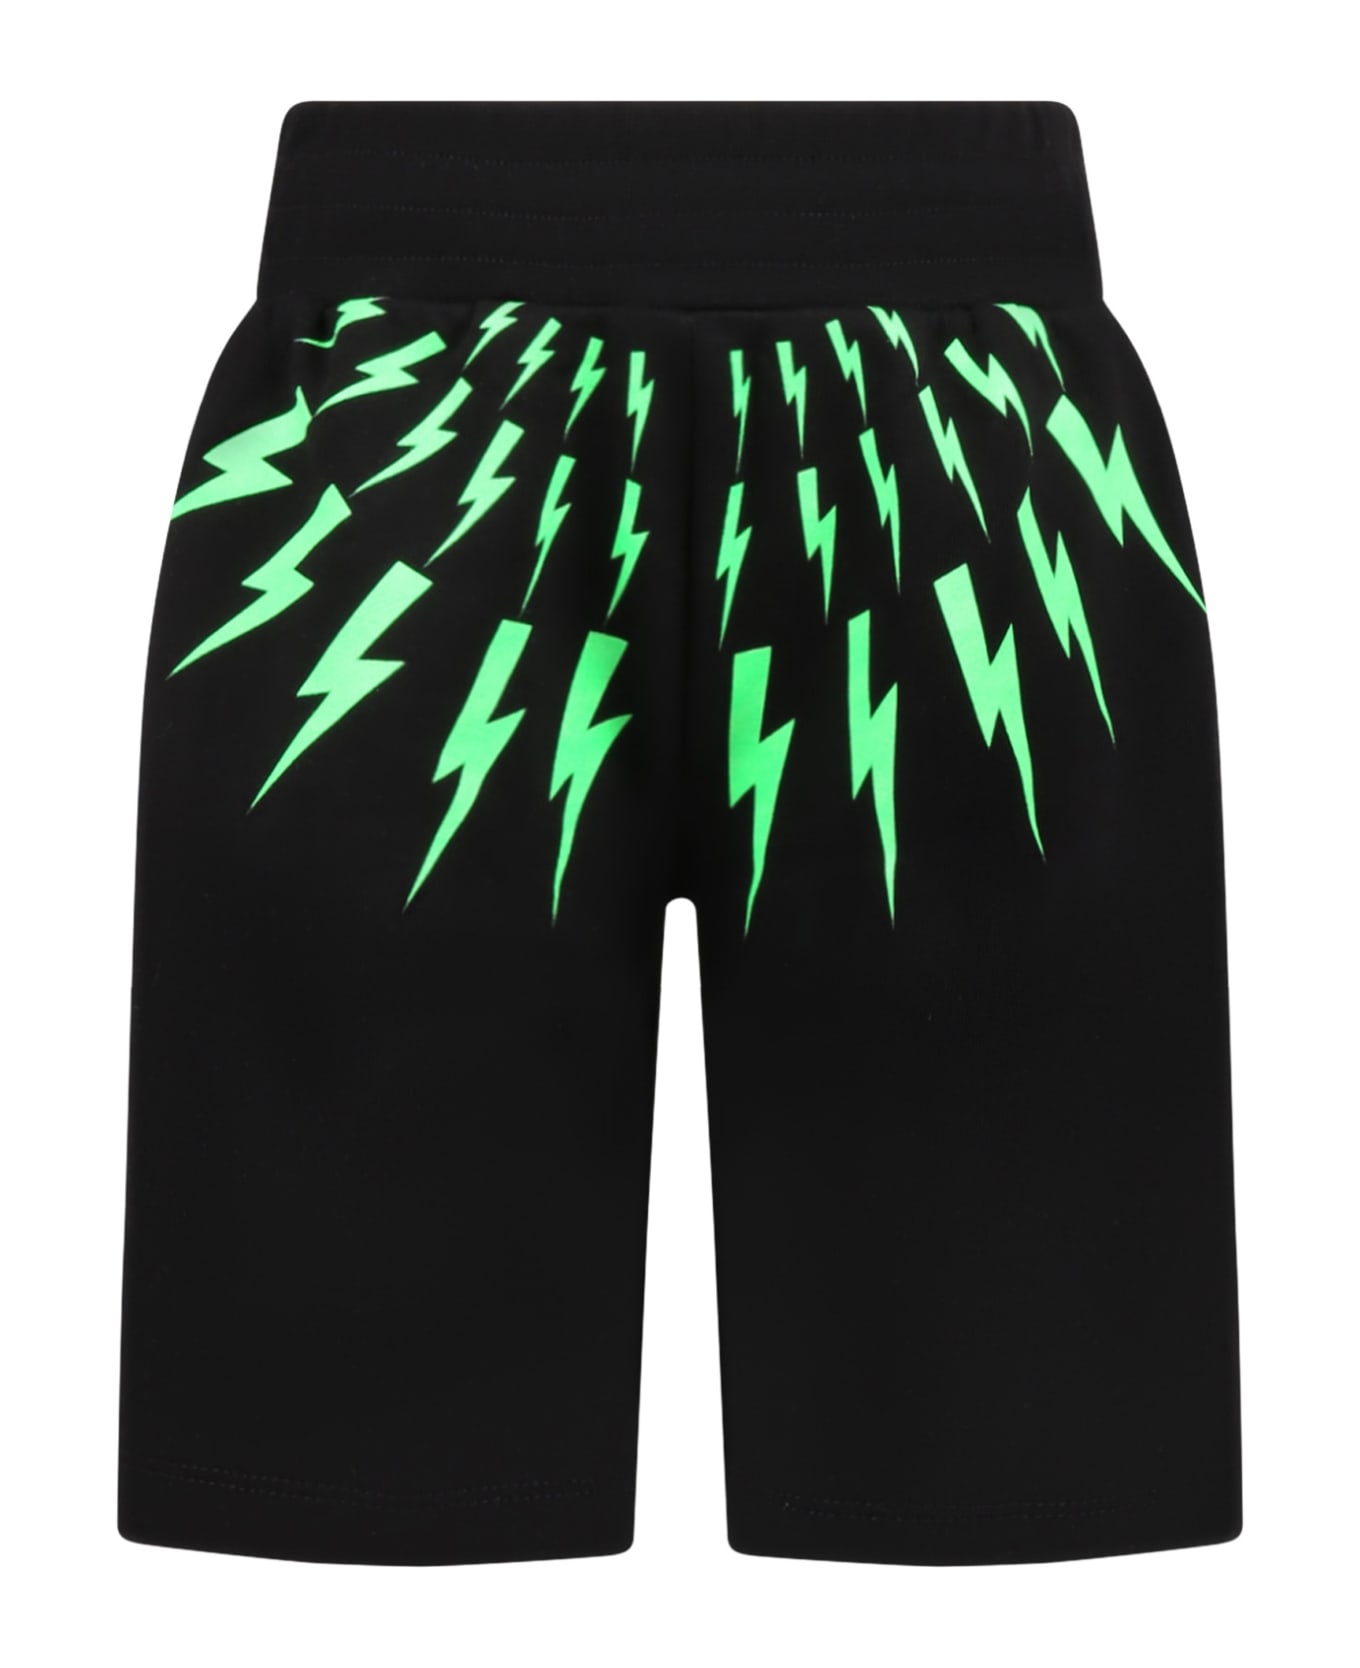 Neil Barrett Black Shorts For Boy With Iconic Lightning Bolts - Black